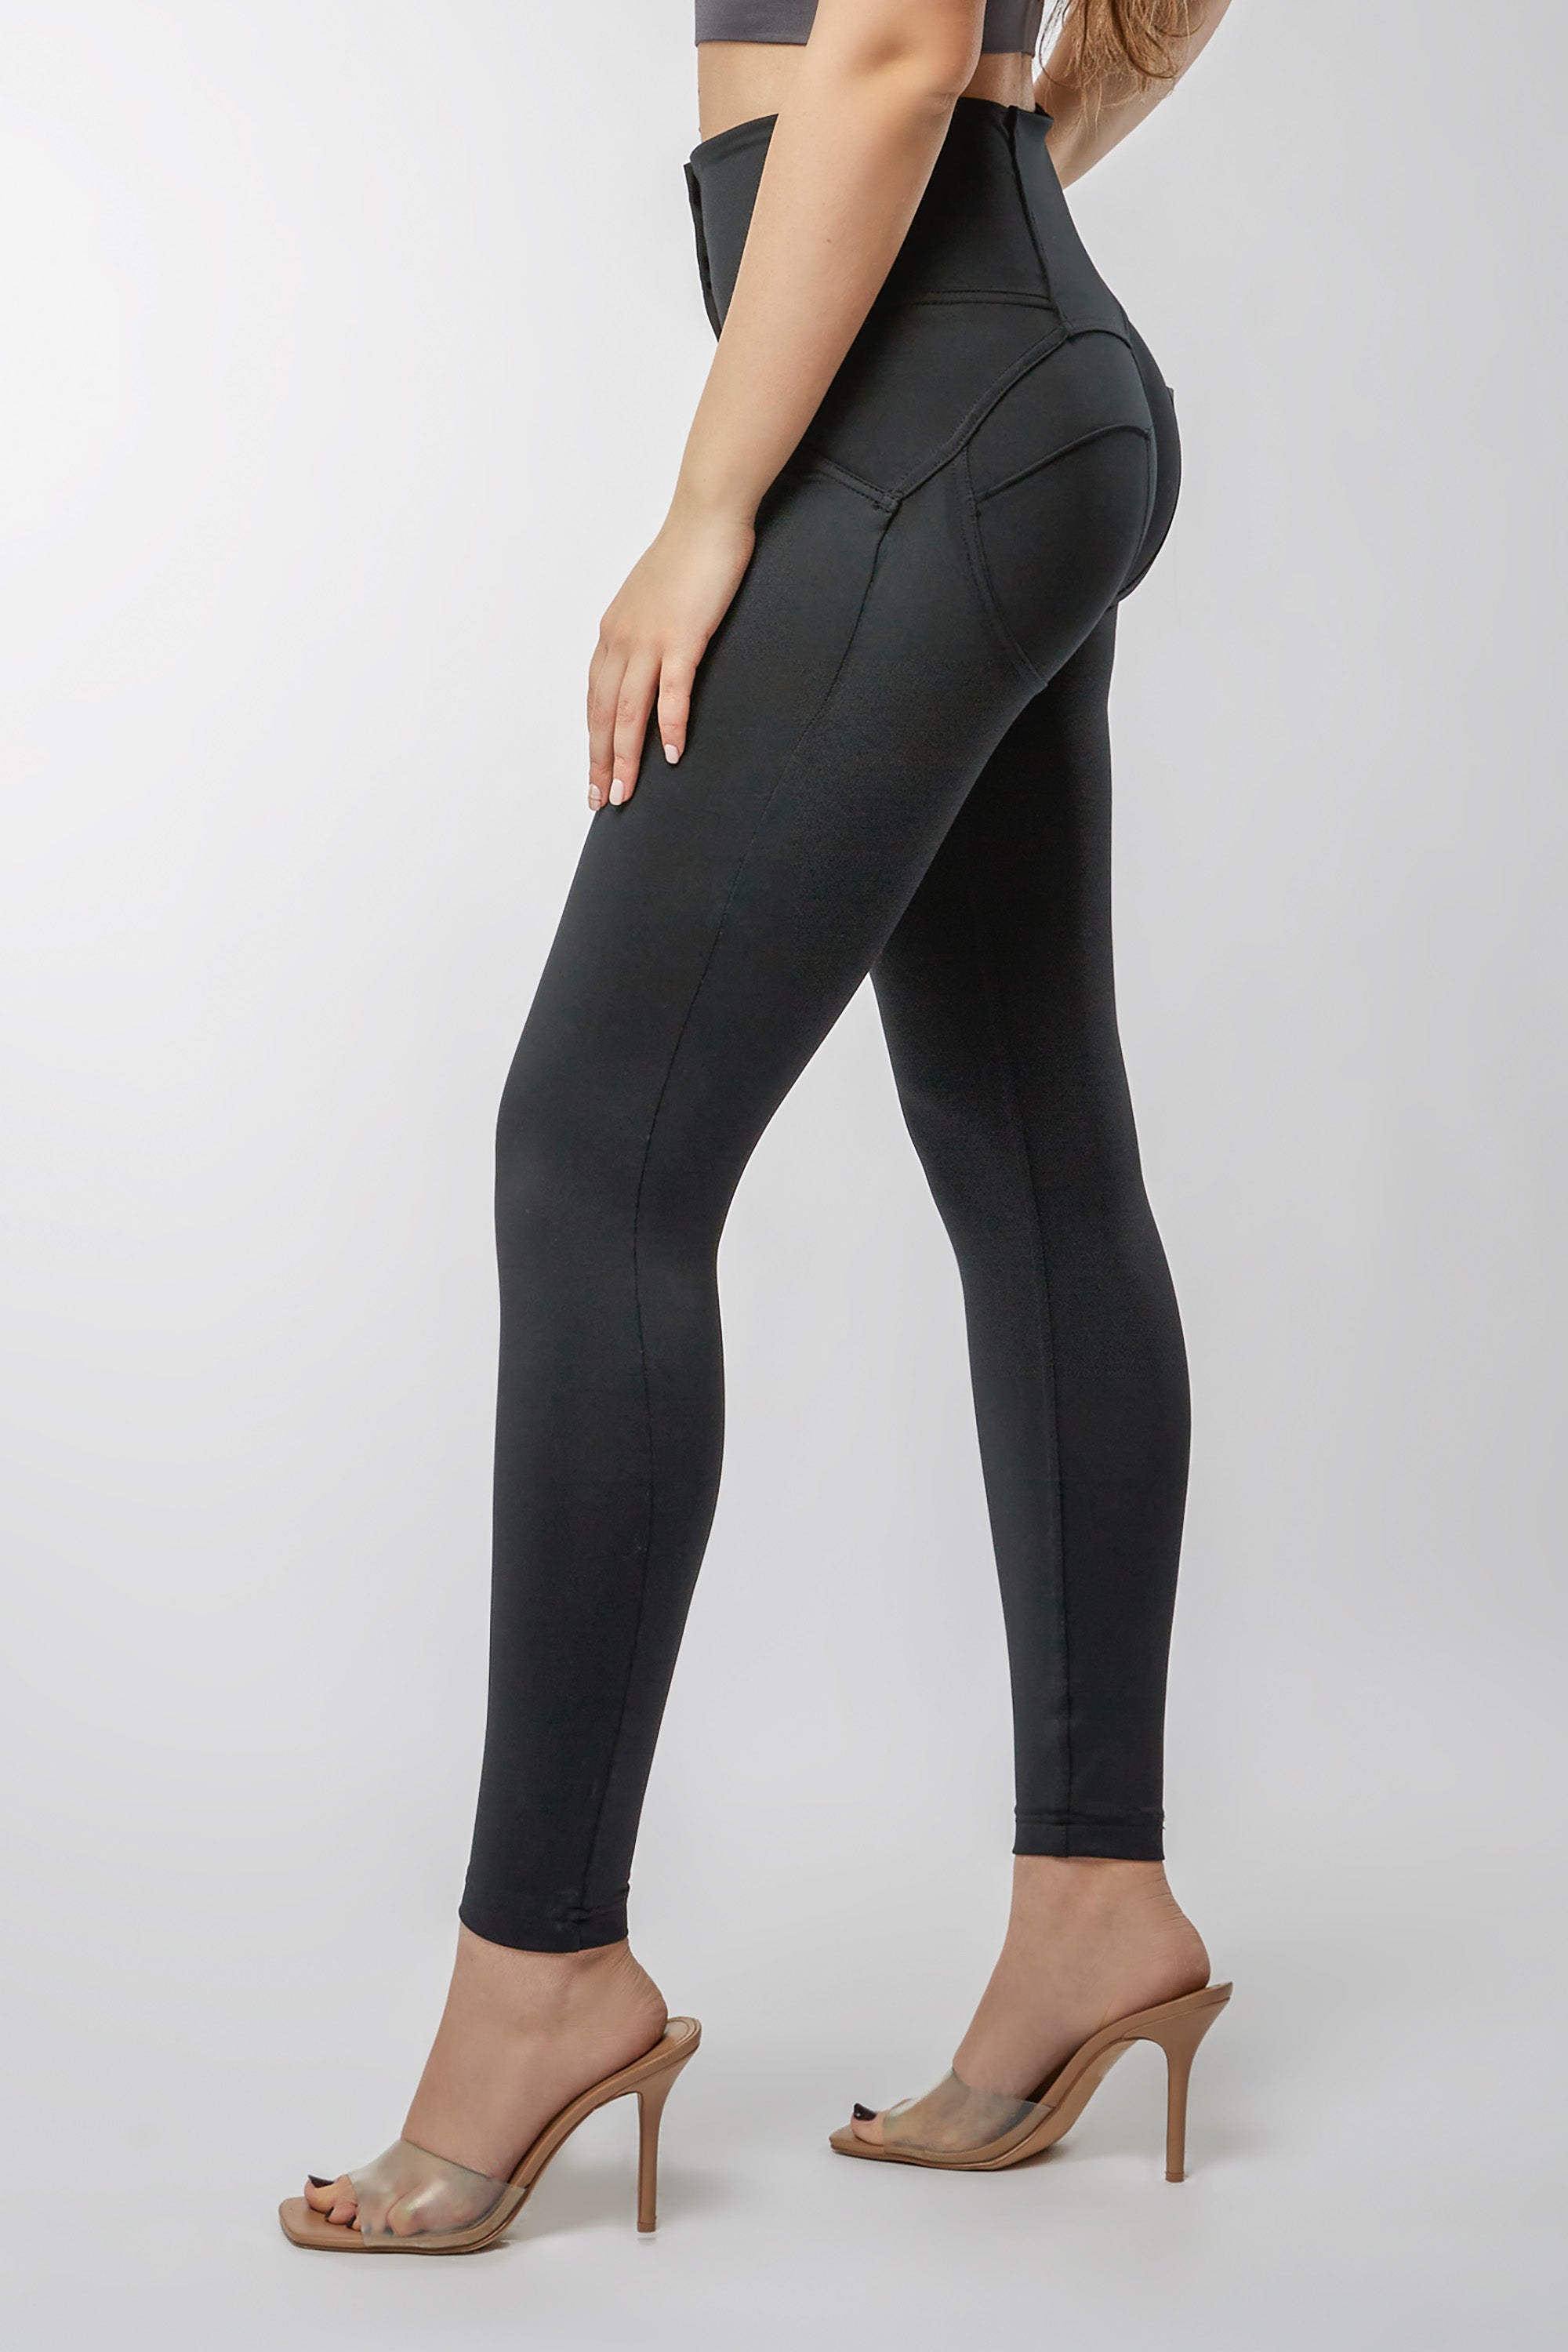 BLINKIN Women's Skinny Fit Polyester Blend 3/4Th Capri Tights  (VG-W997-29J8_Black)